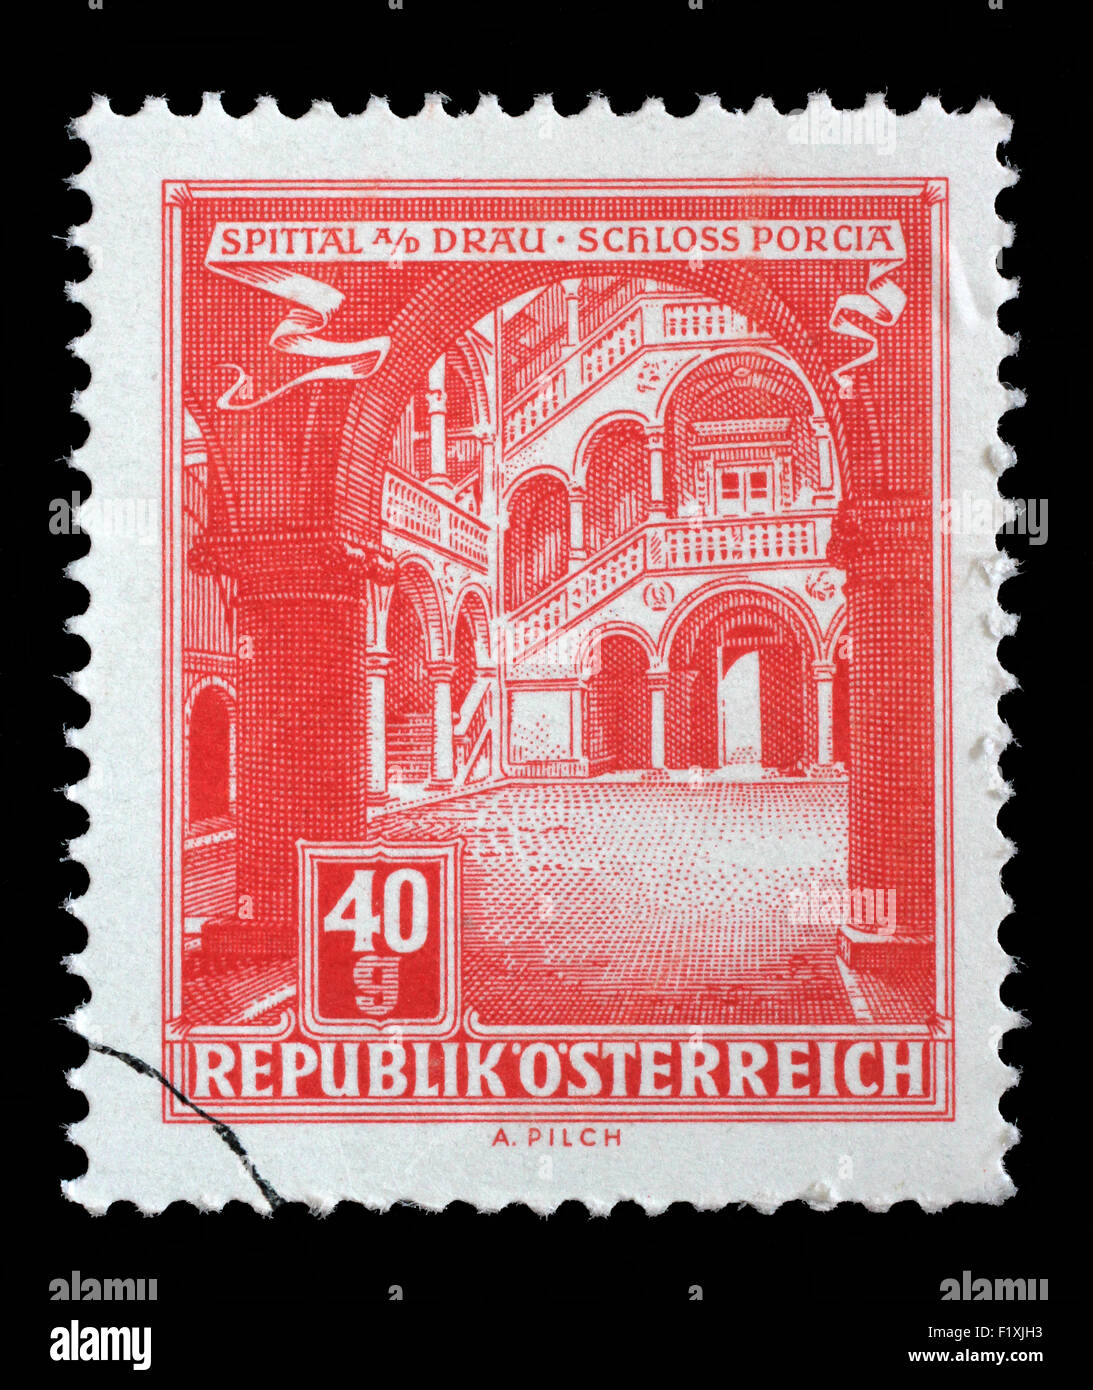 Stamp printed in Austria, shows Schloss Porcia (Porcia Castle) in Spittal an der Drau, circa 1962 Stock Photo